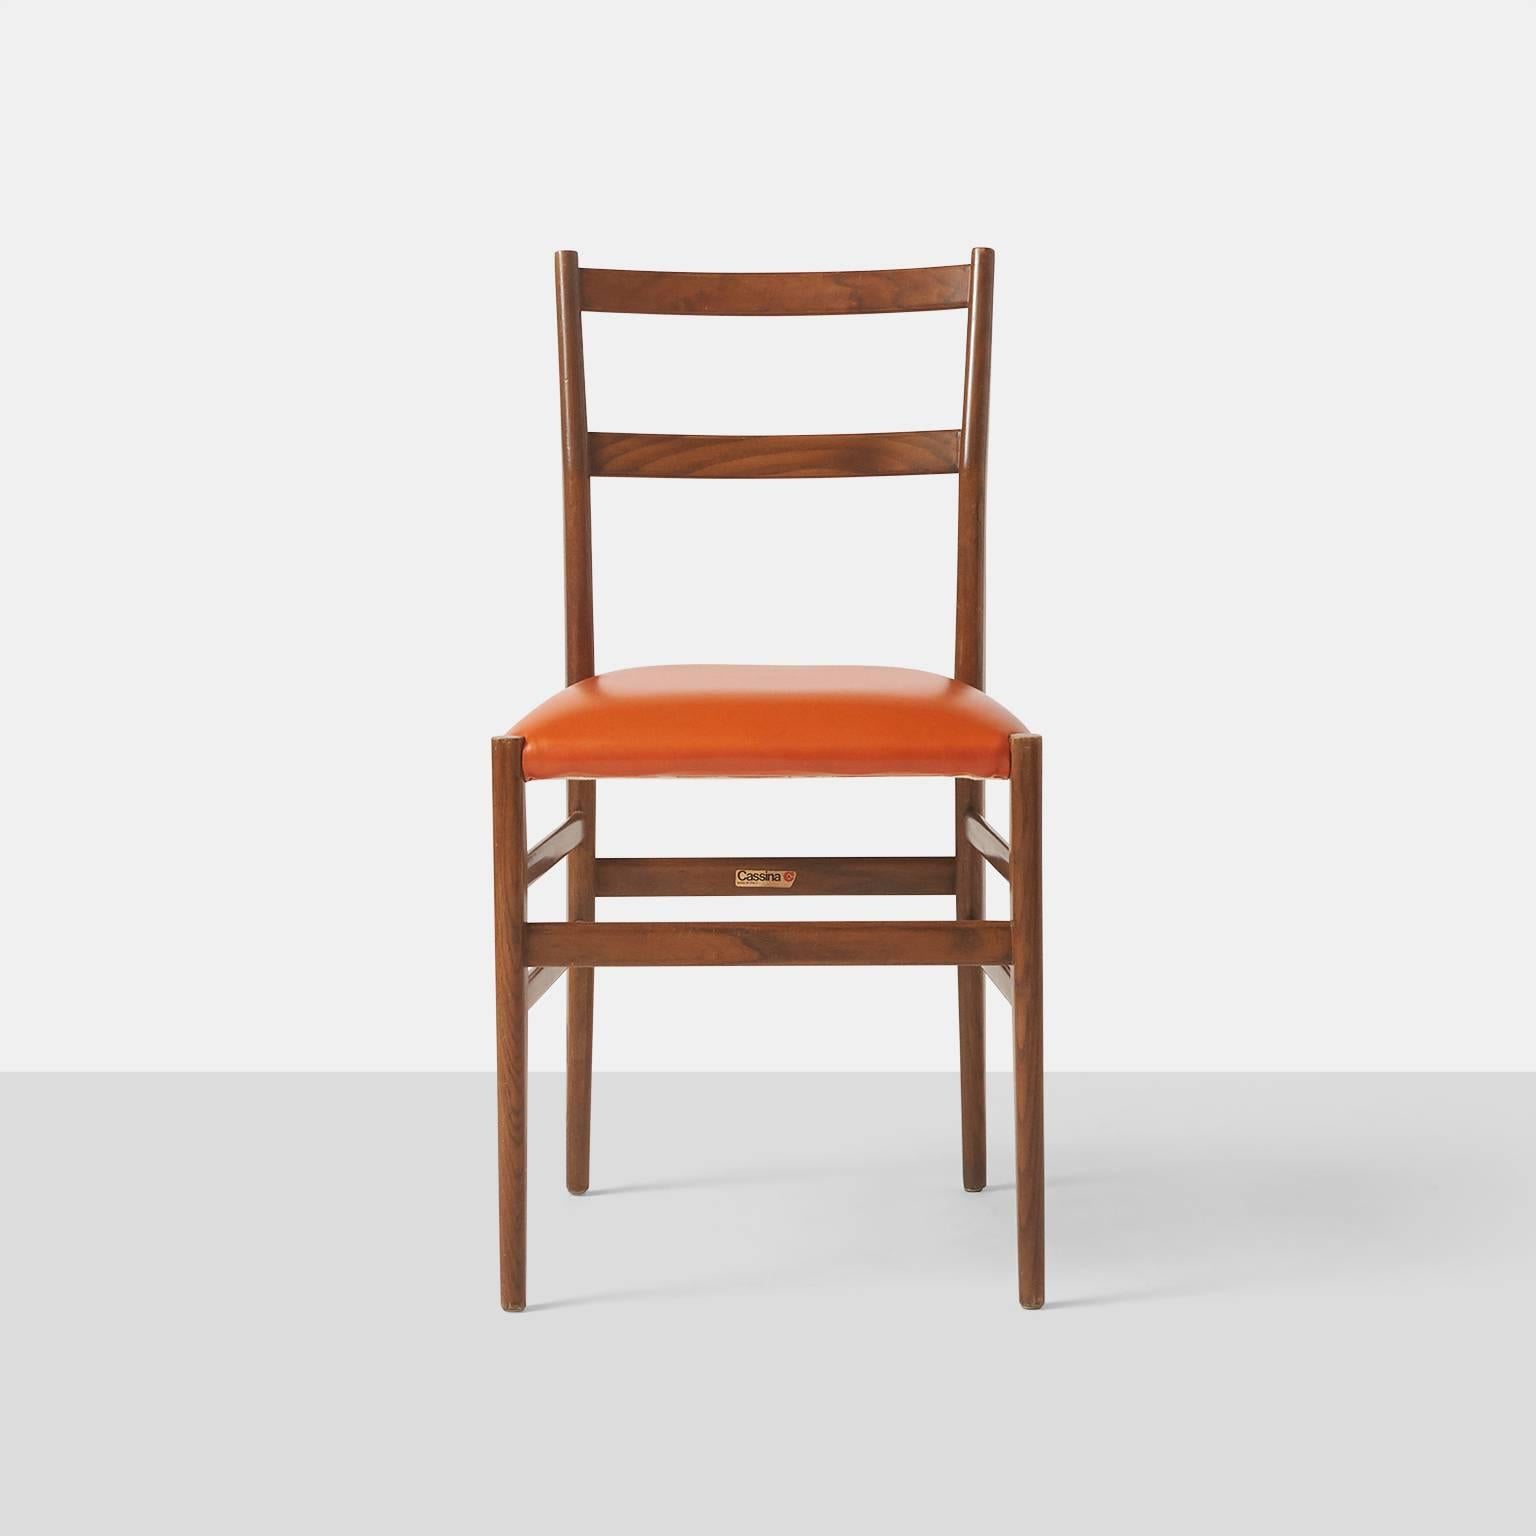 Italian Leggera Chairs by Gio Ponti for Cassina